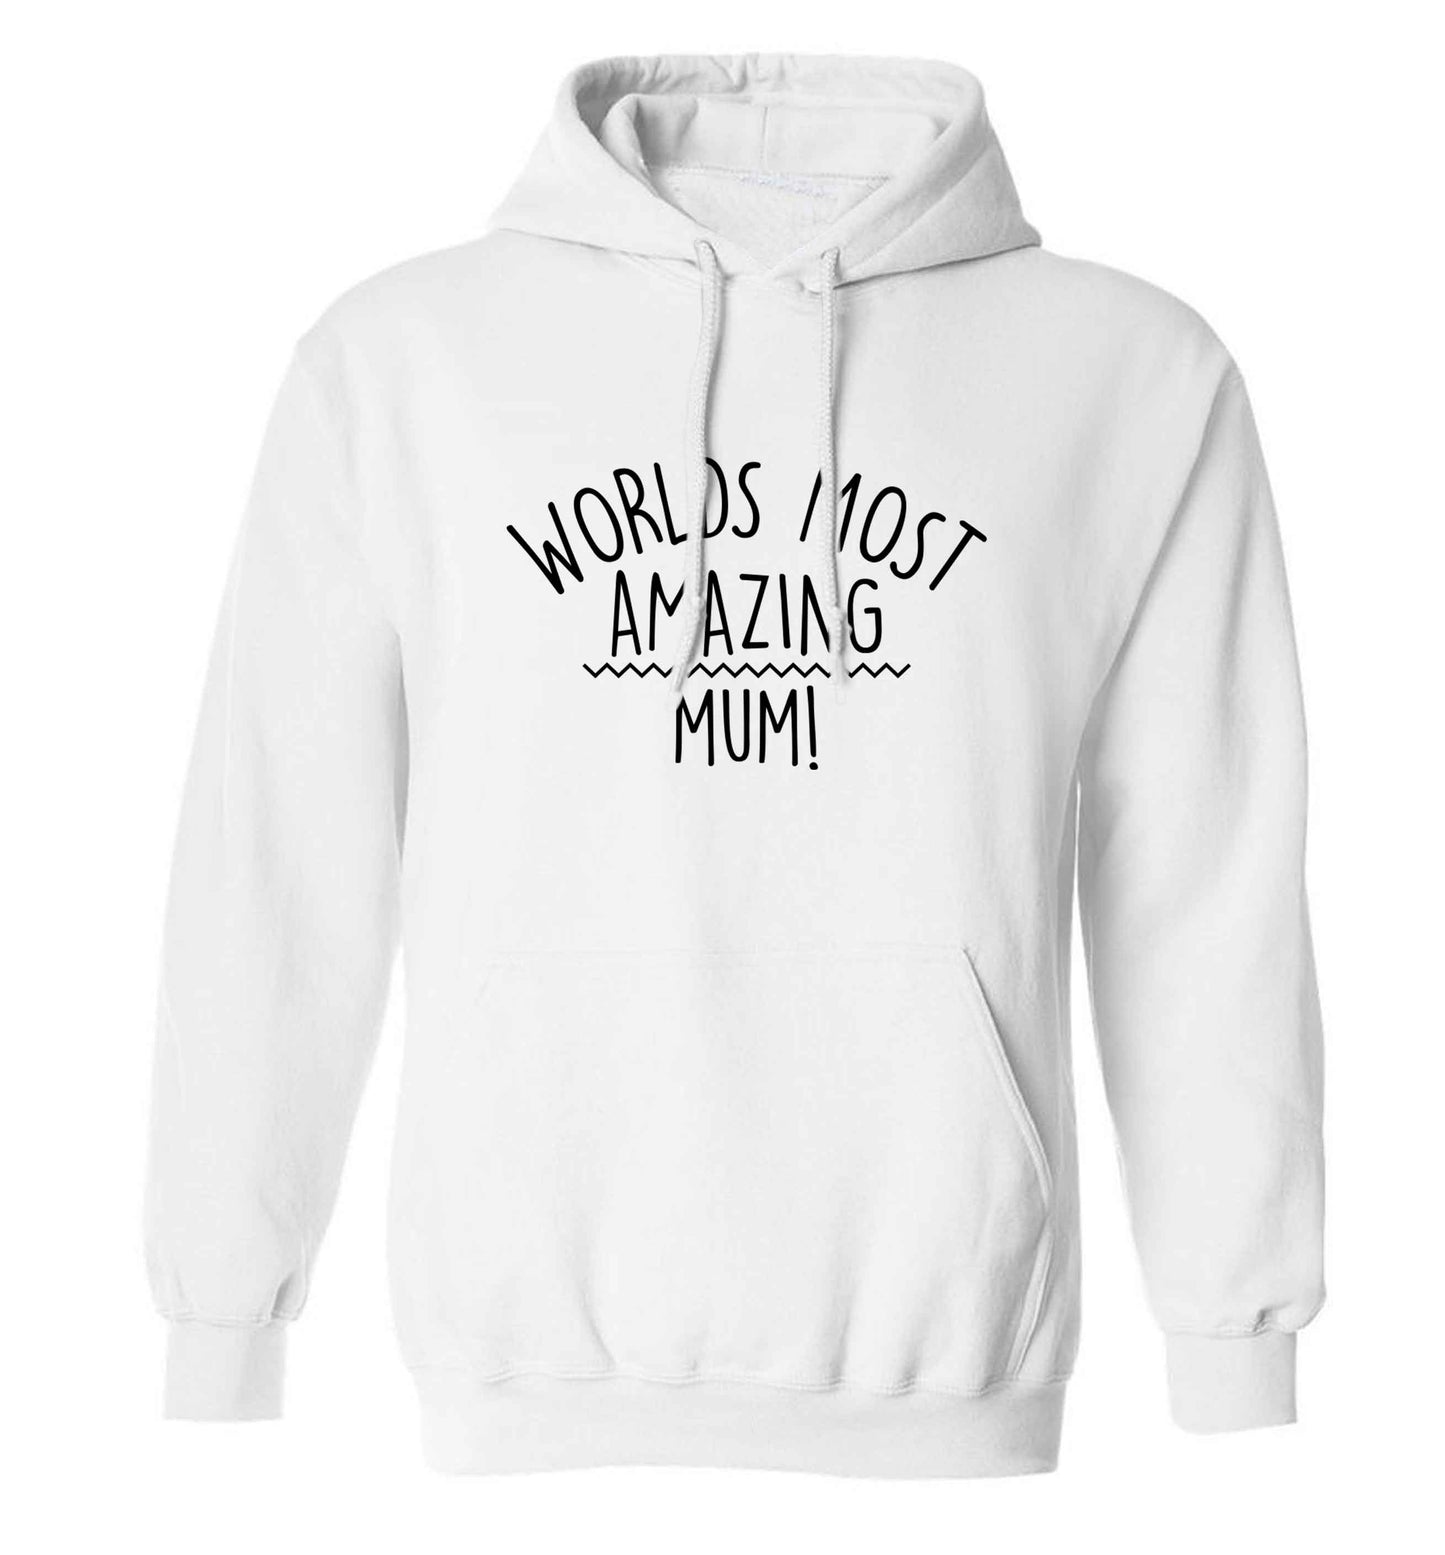 Worlds most amazing mum adults unisex white hoodie 2XL